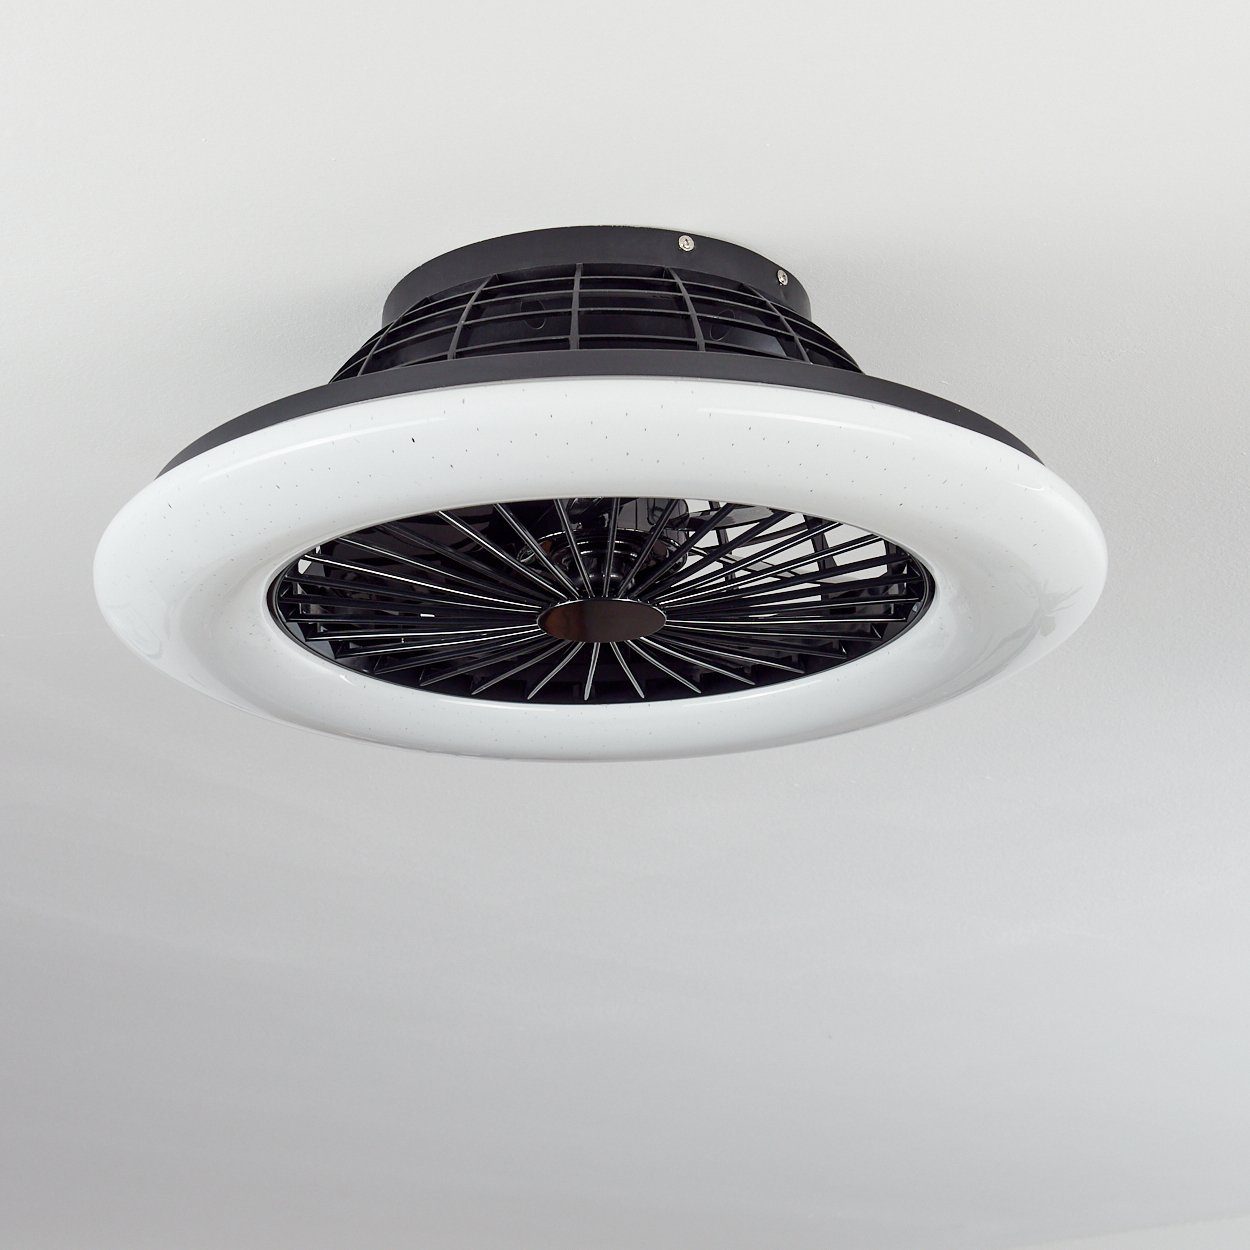 hofstein Tischturmventilator Ventilator Metall, Weiß Deckenlampe, Kunststoff, »Concas« aus Schwarz